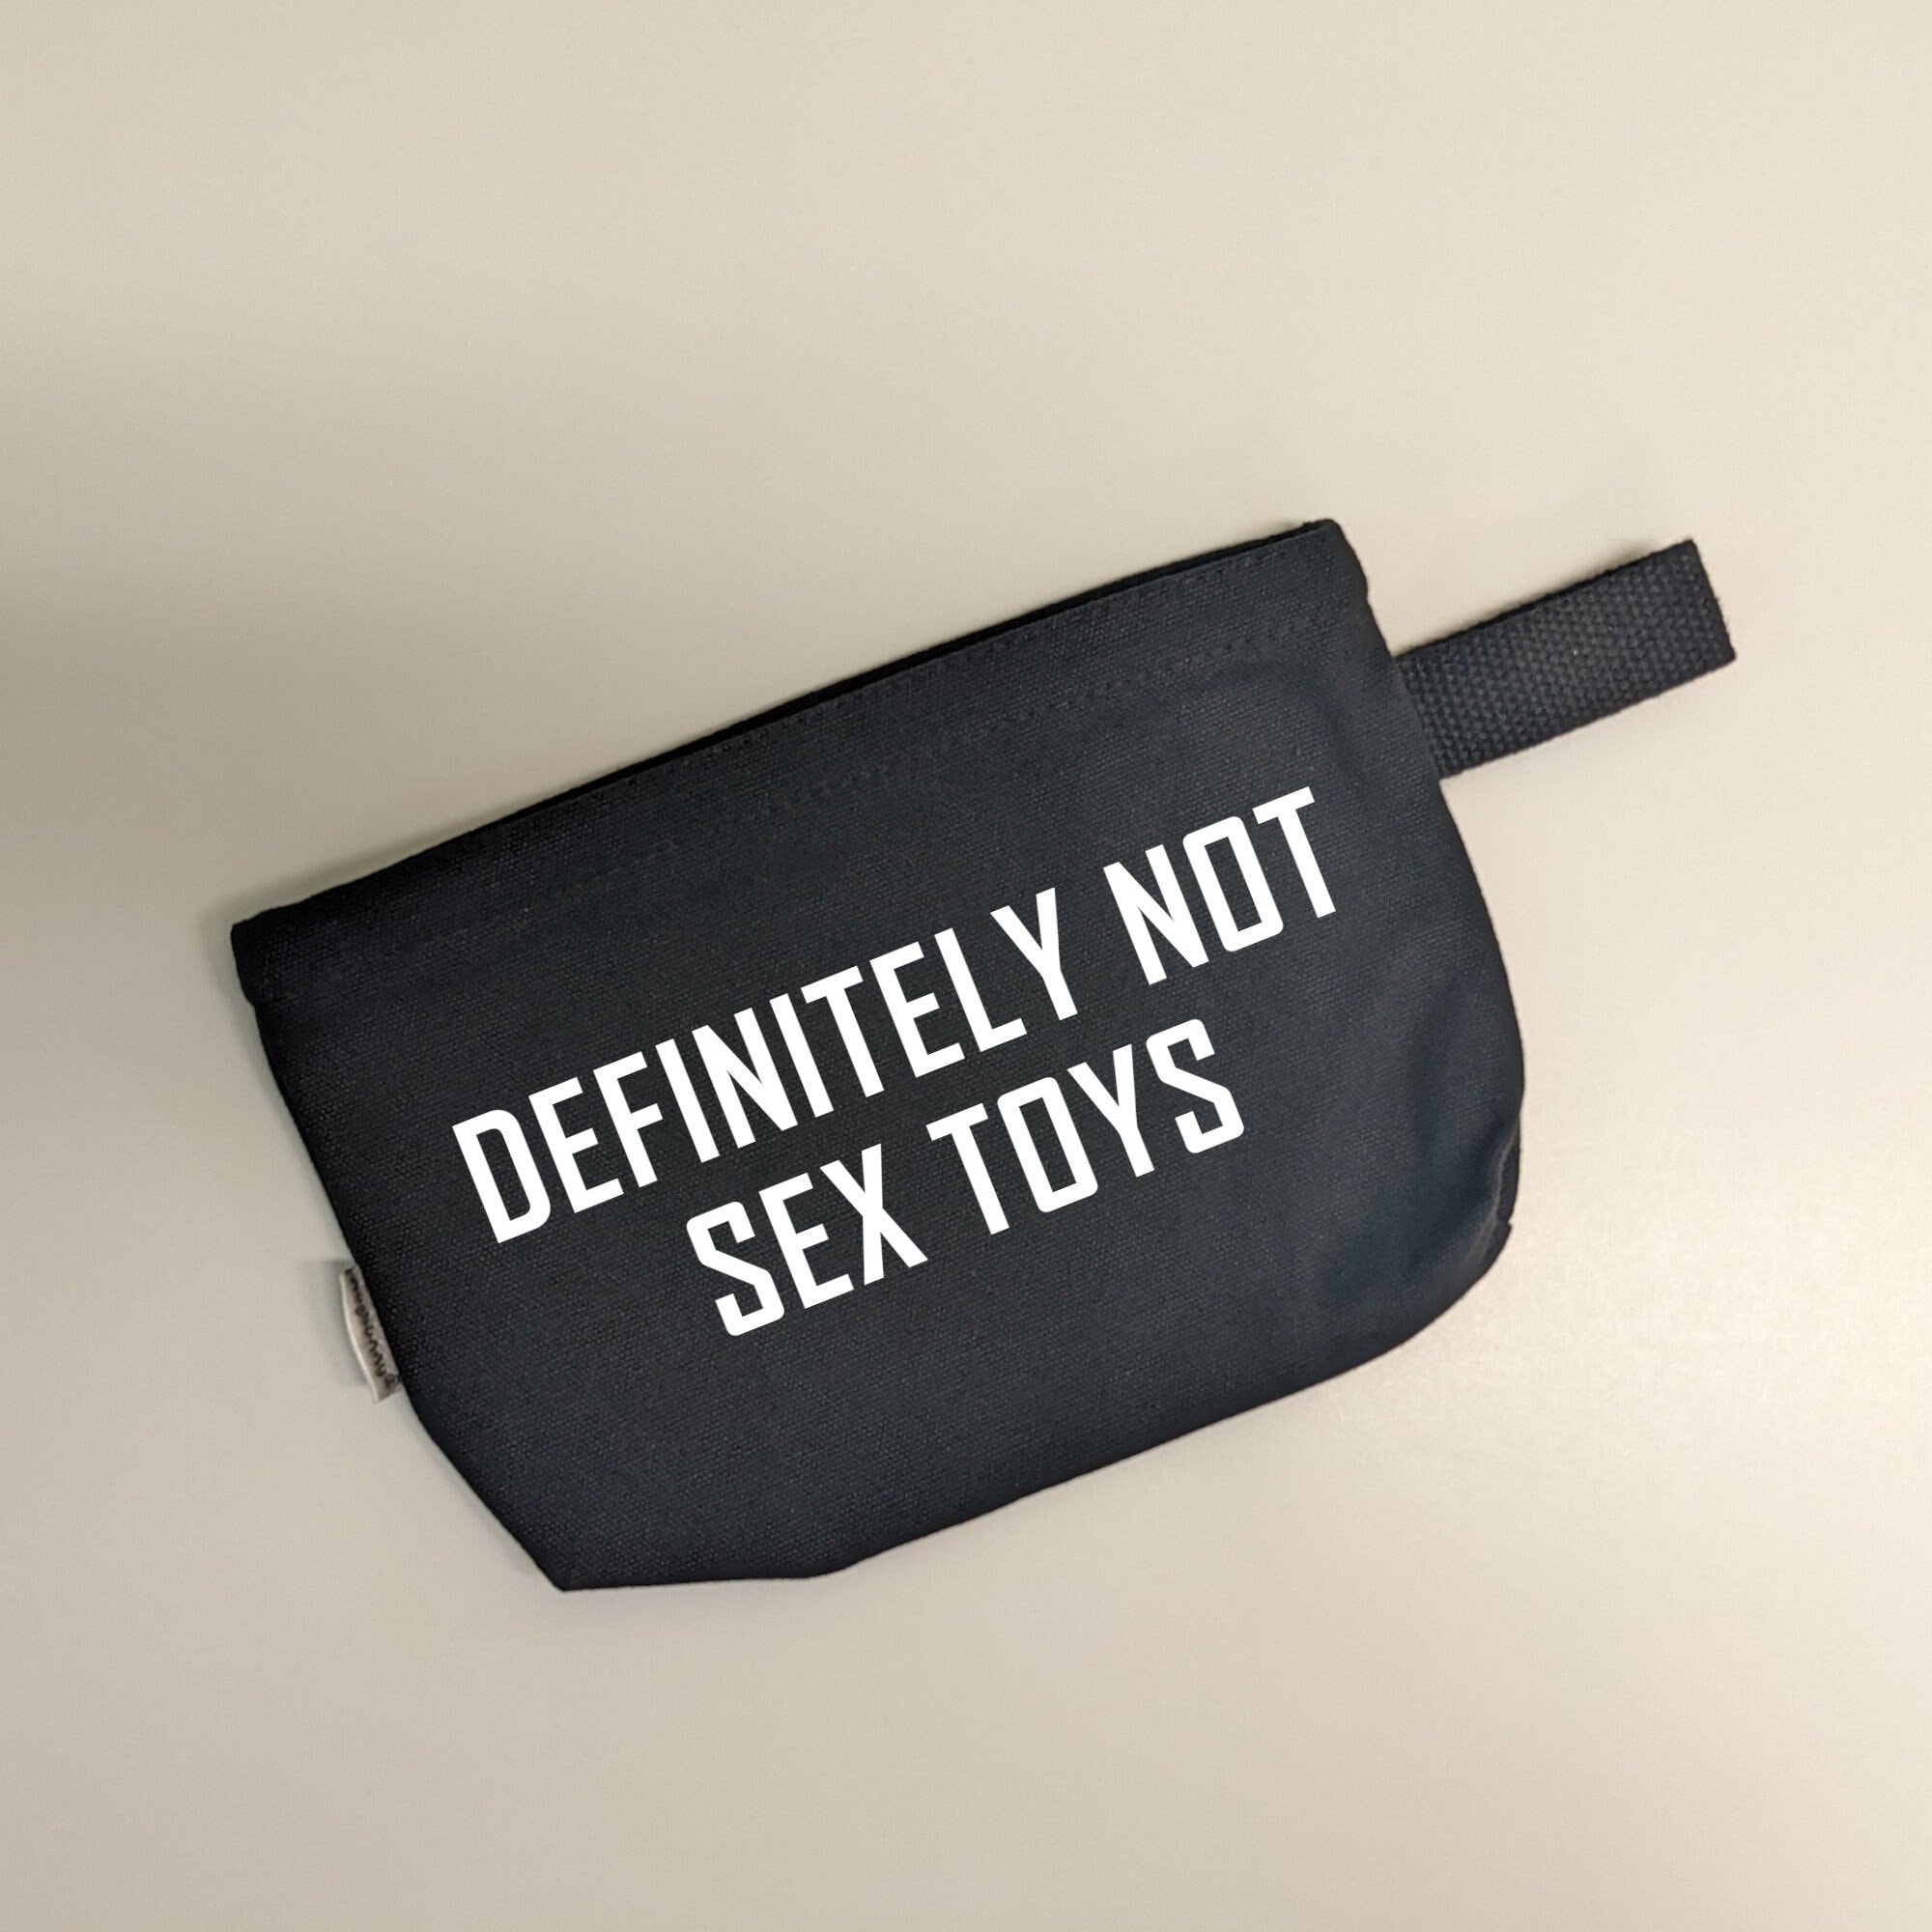 Definitely Not Sex Toys Bag / Funny BDSM Zipper Bag / Hotwife image pic